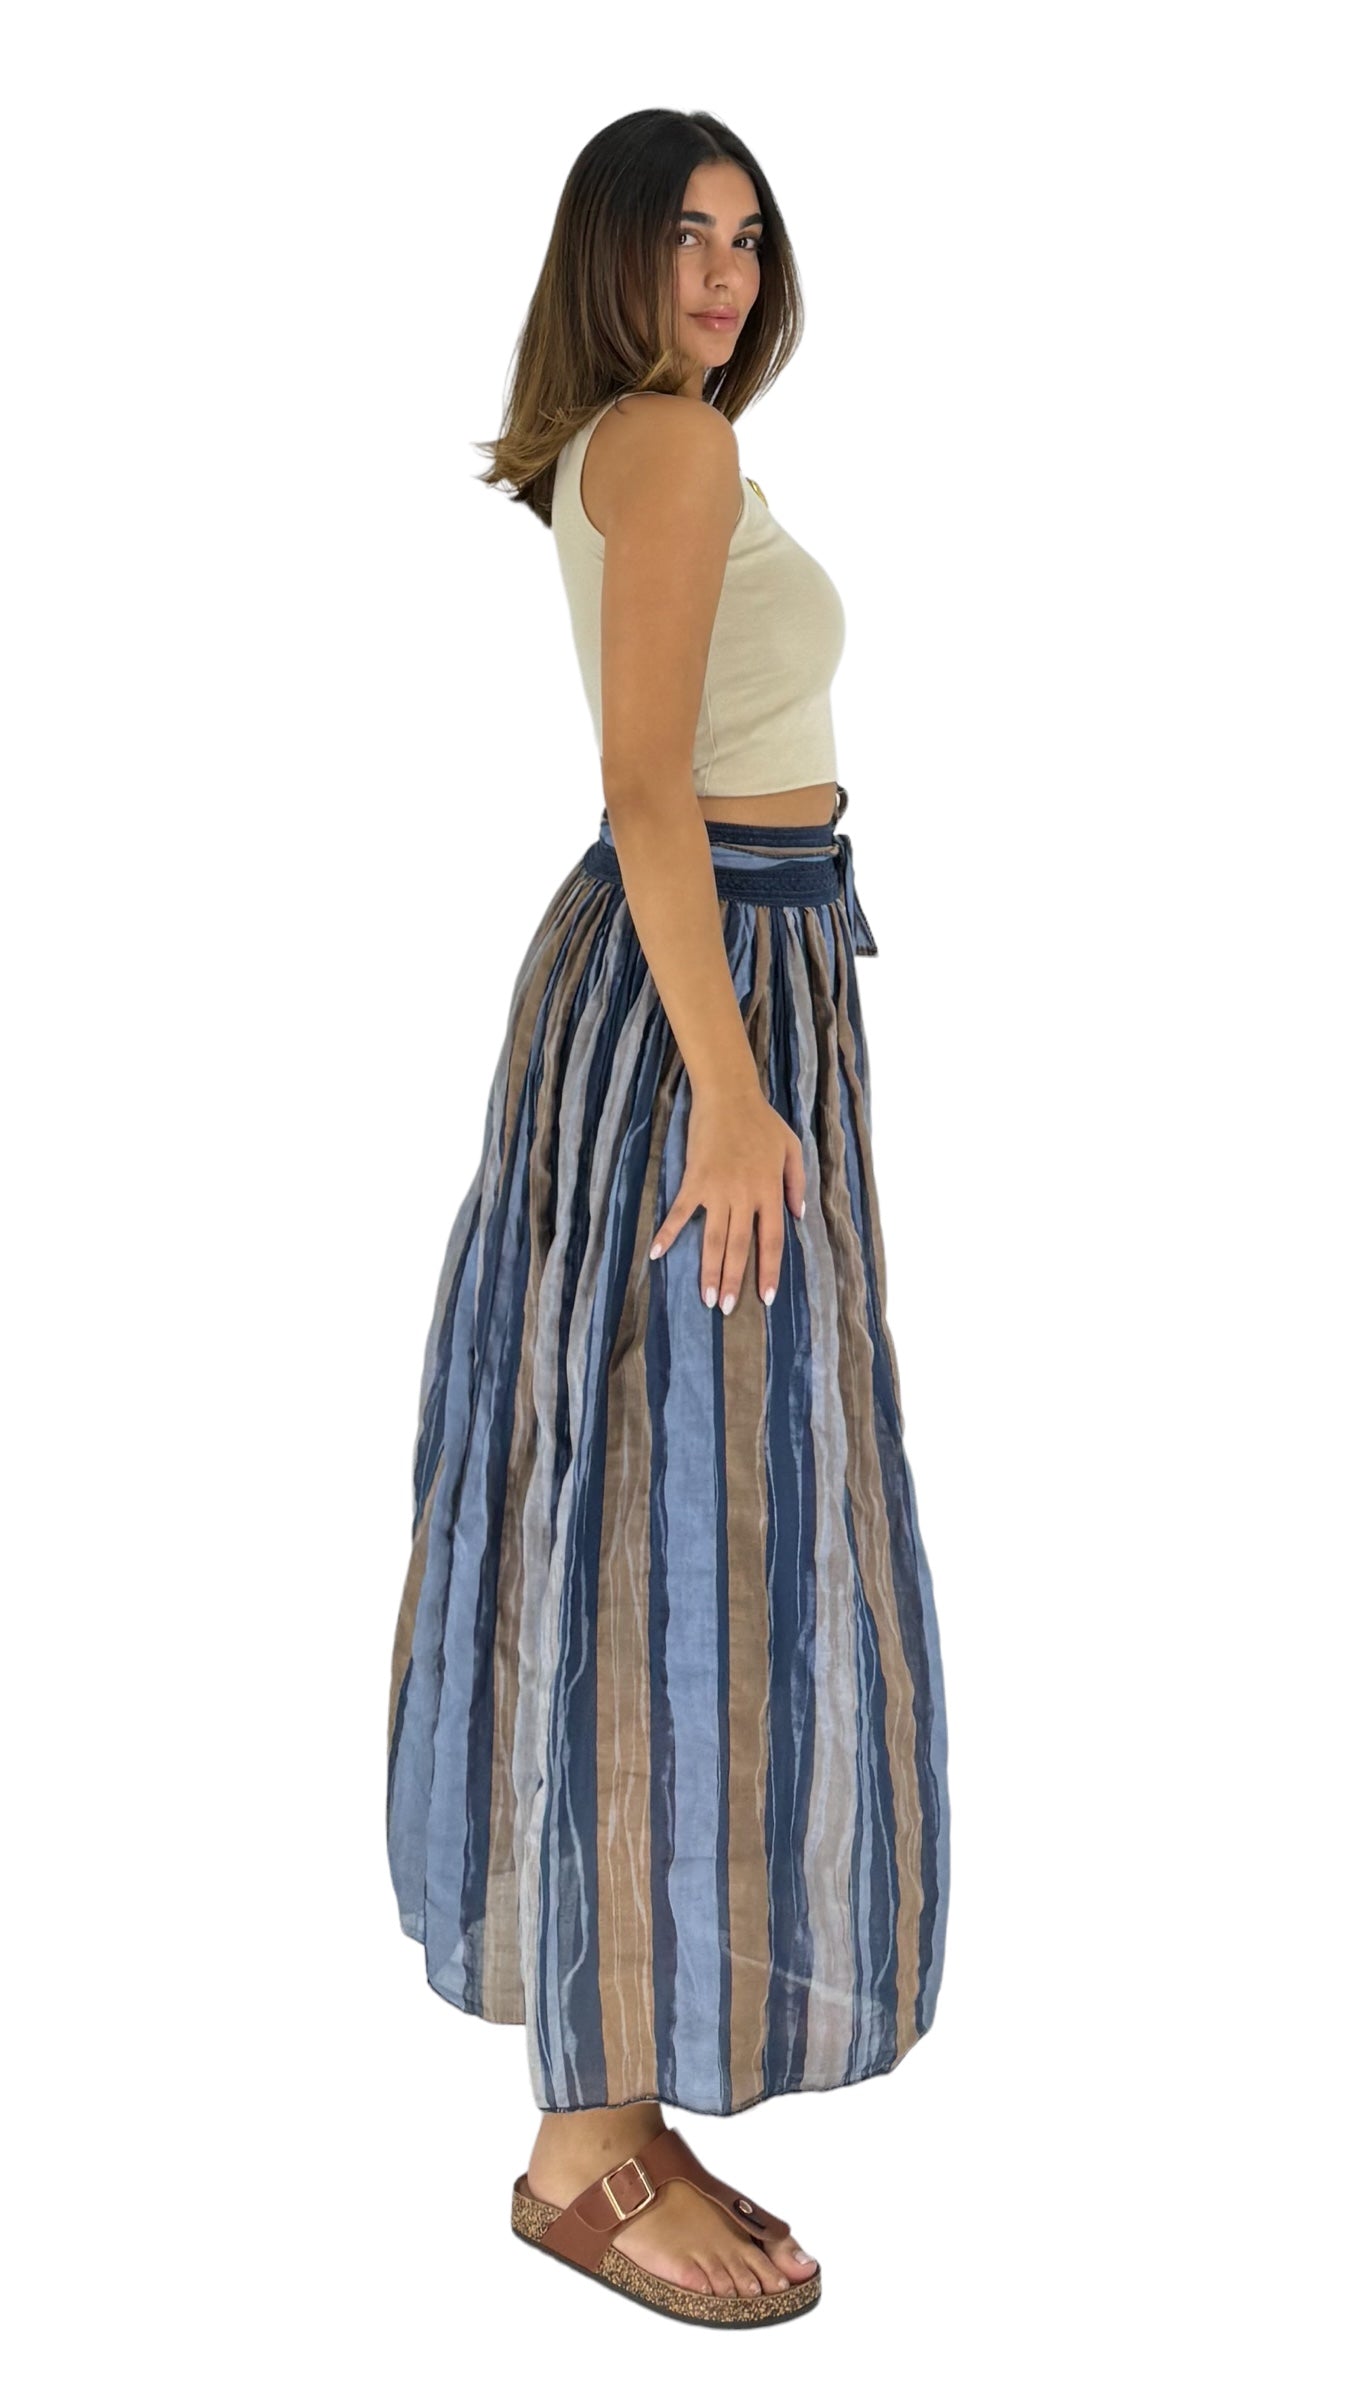 Mesa colored skirt